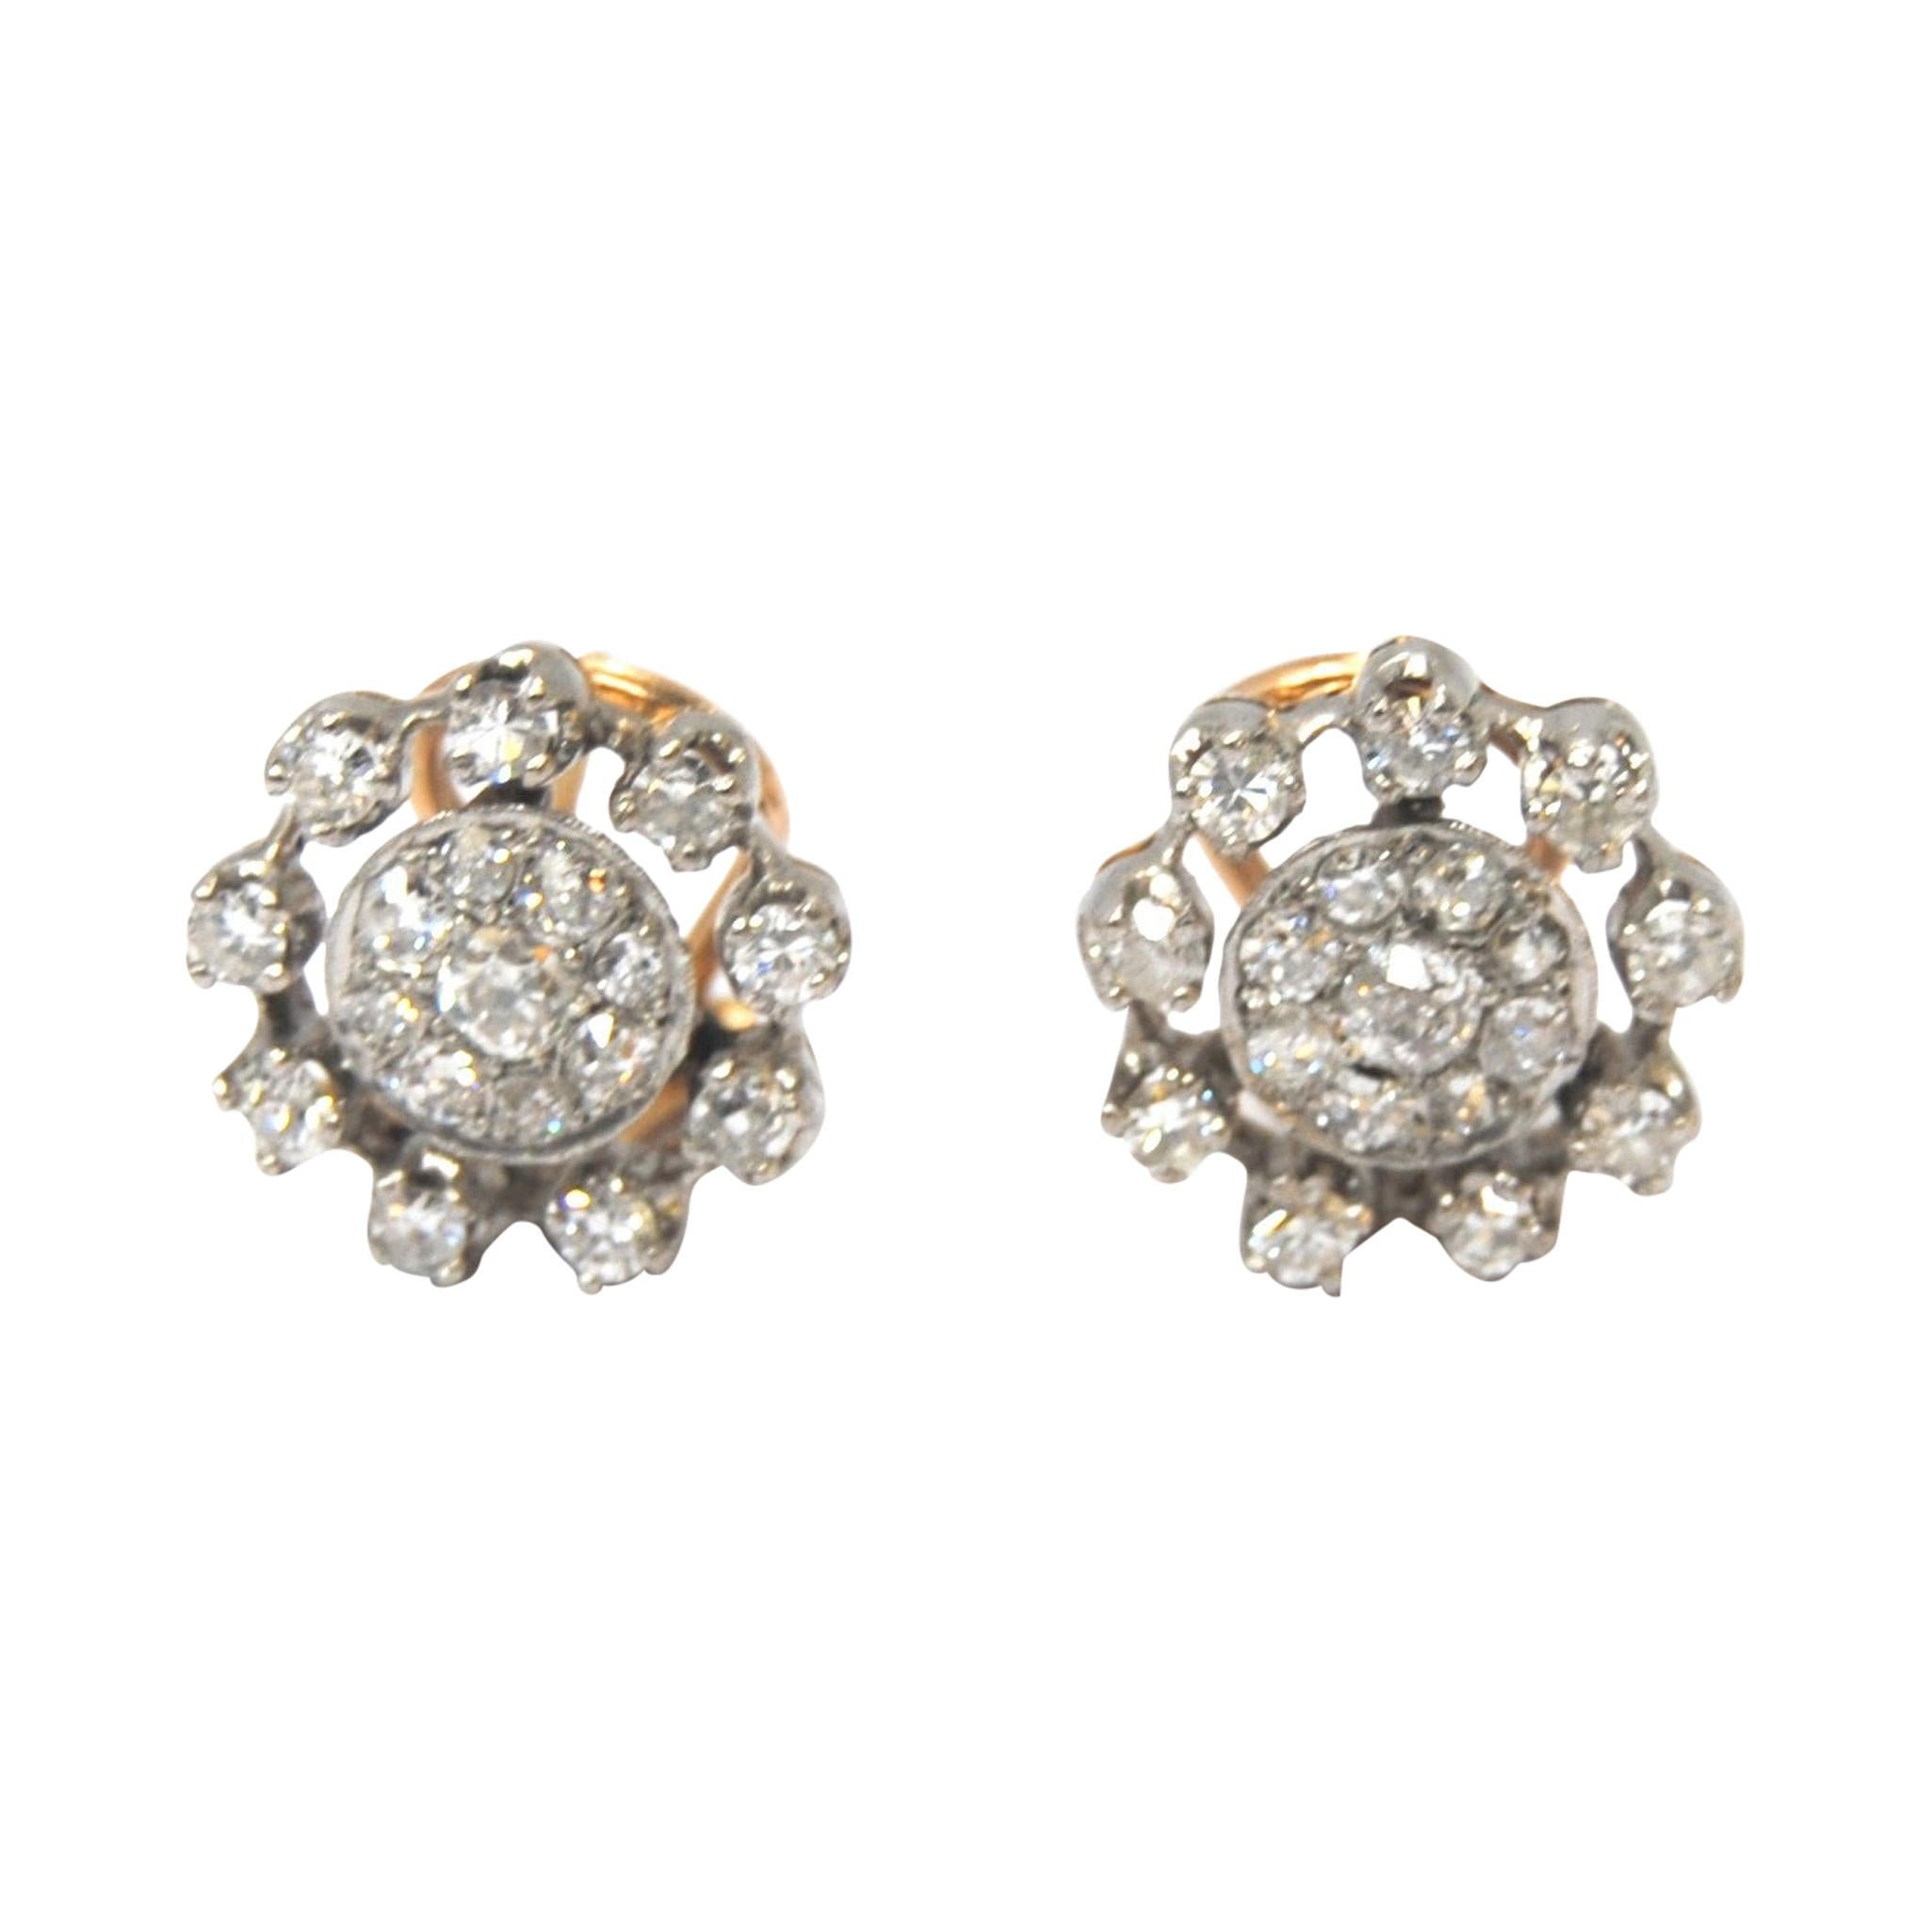 Vintage Diamond Stud Earrings in 18 Karat White and Rose Gold